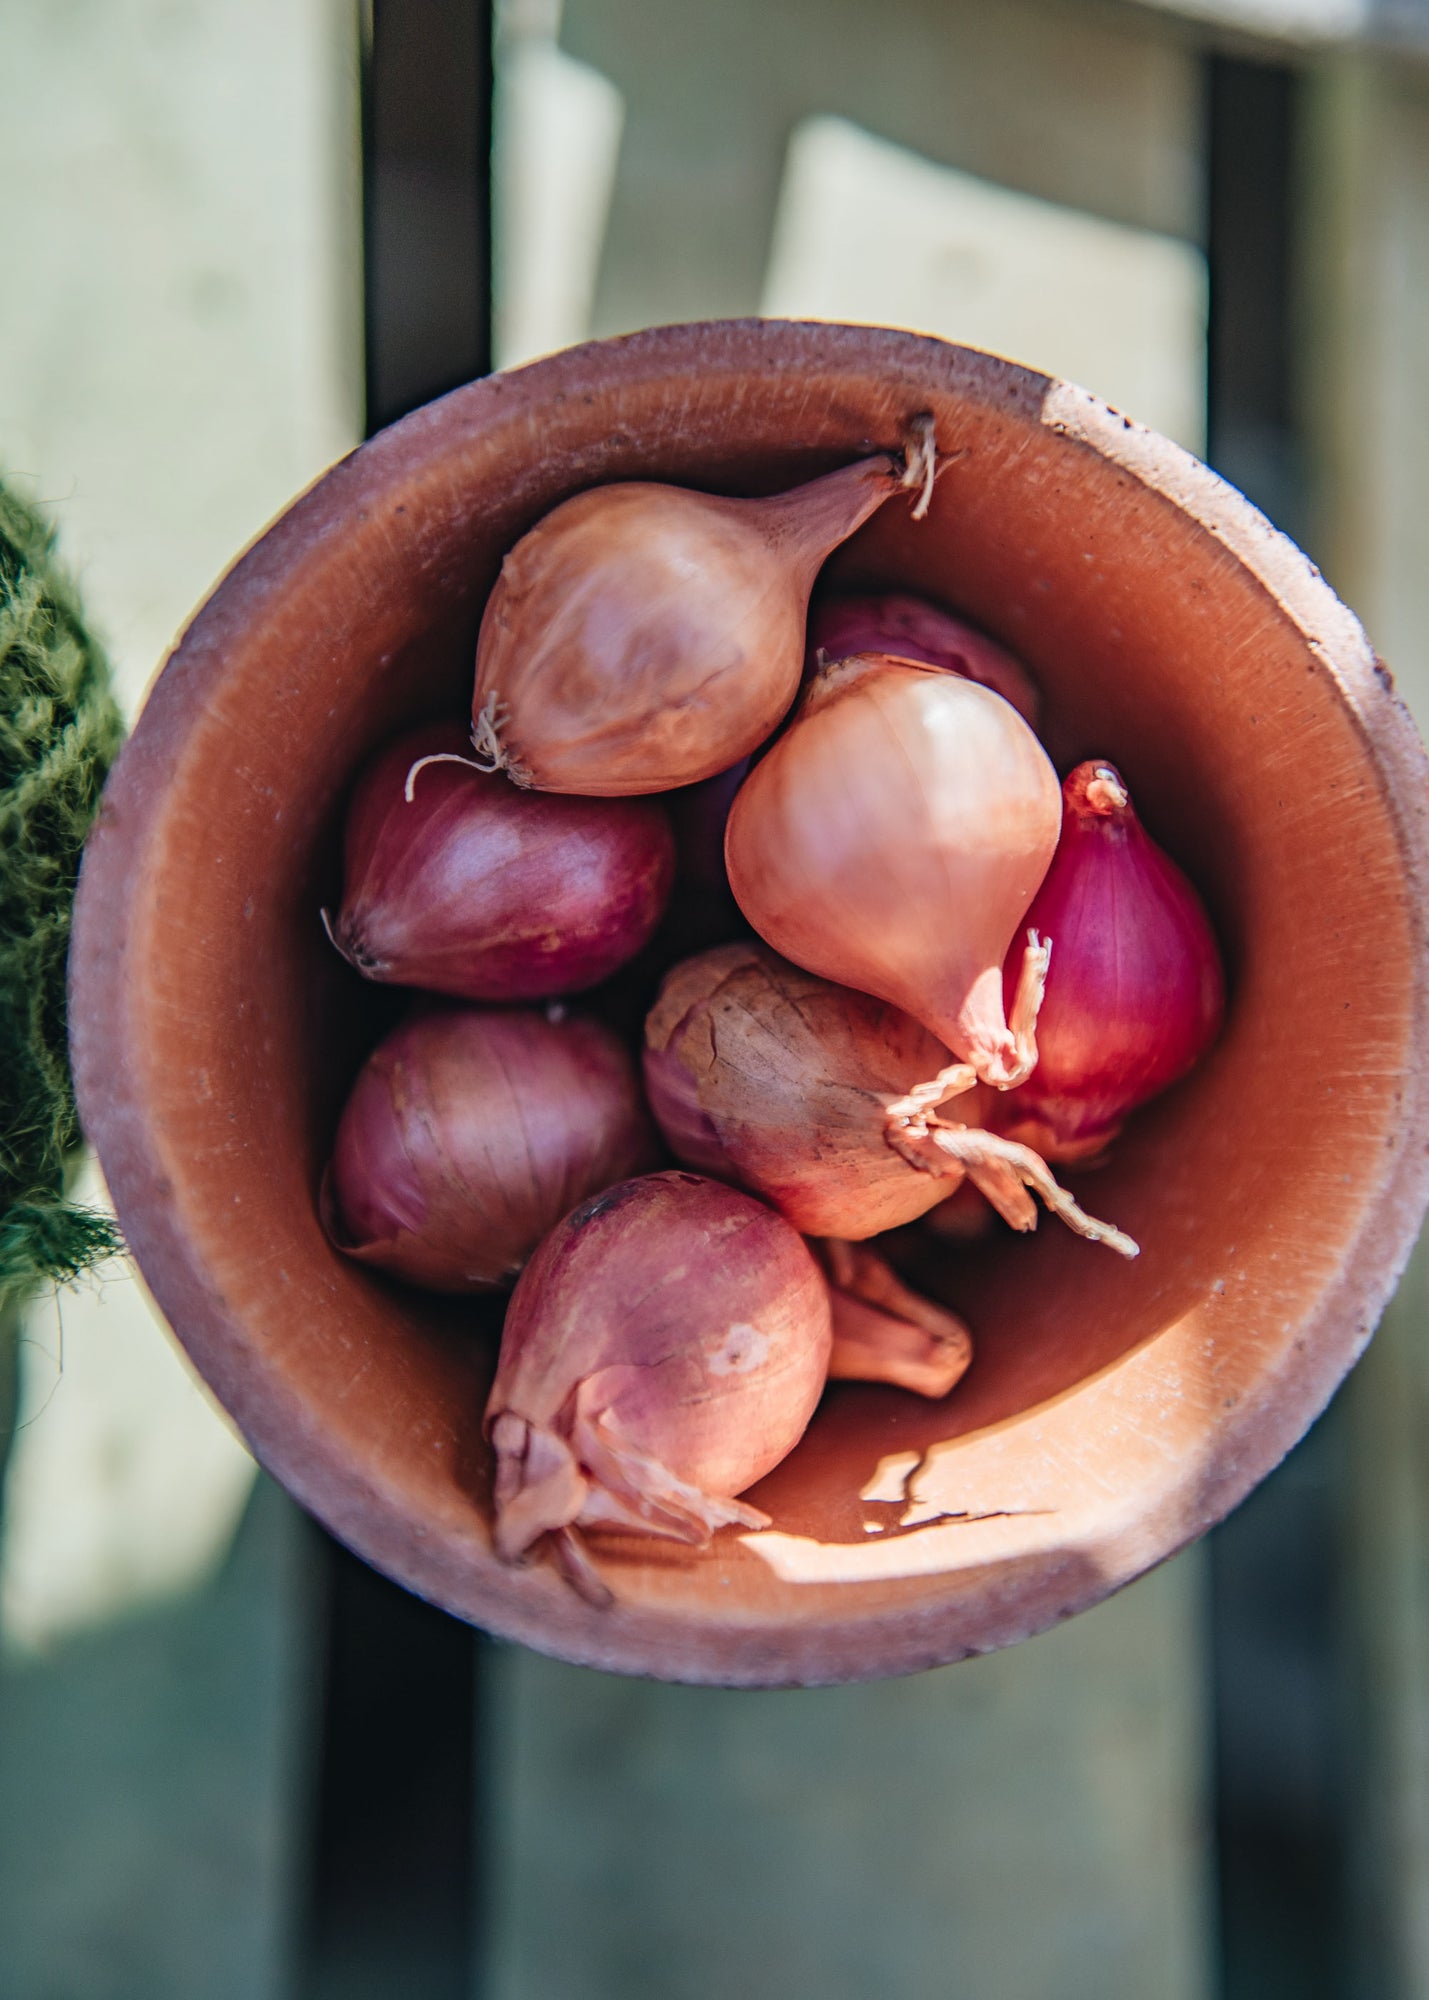 Onion, Shallot & Garlic Sets